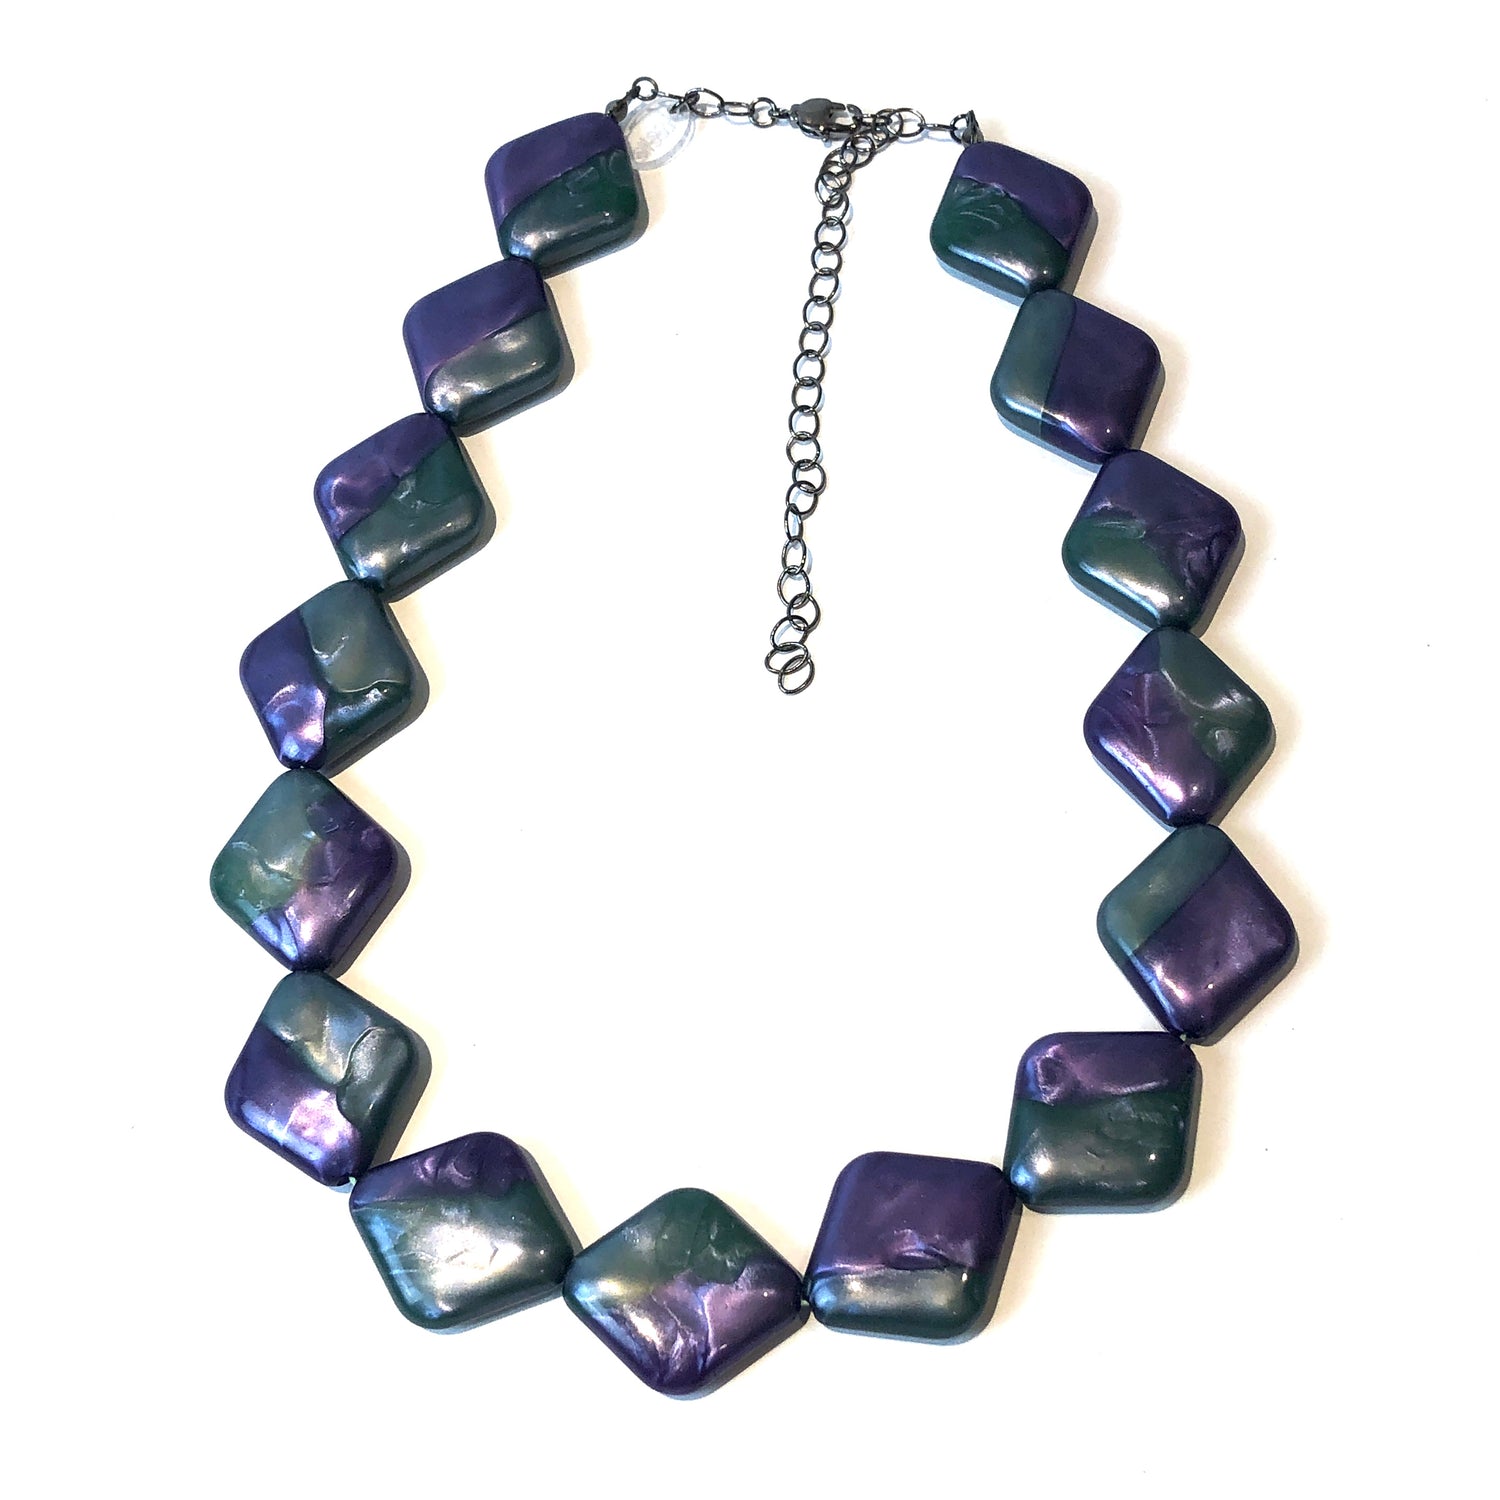 green purple necklace